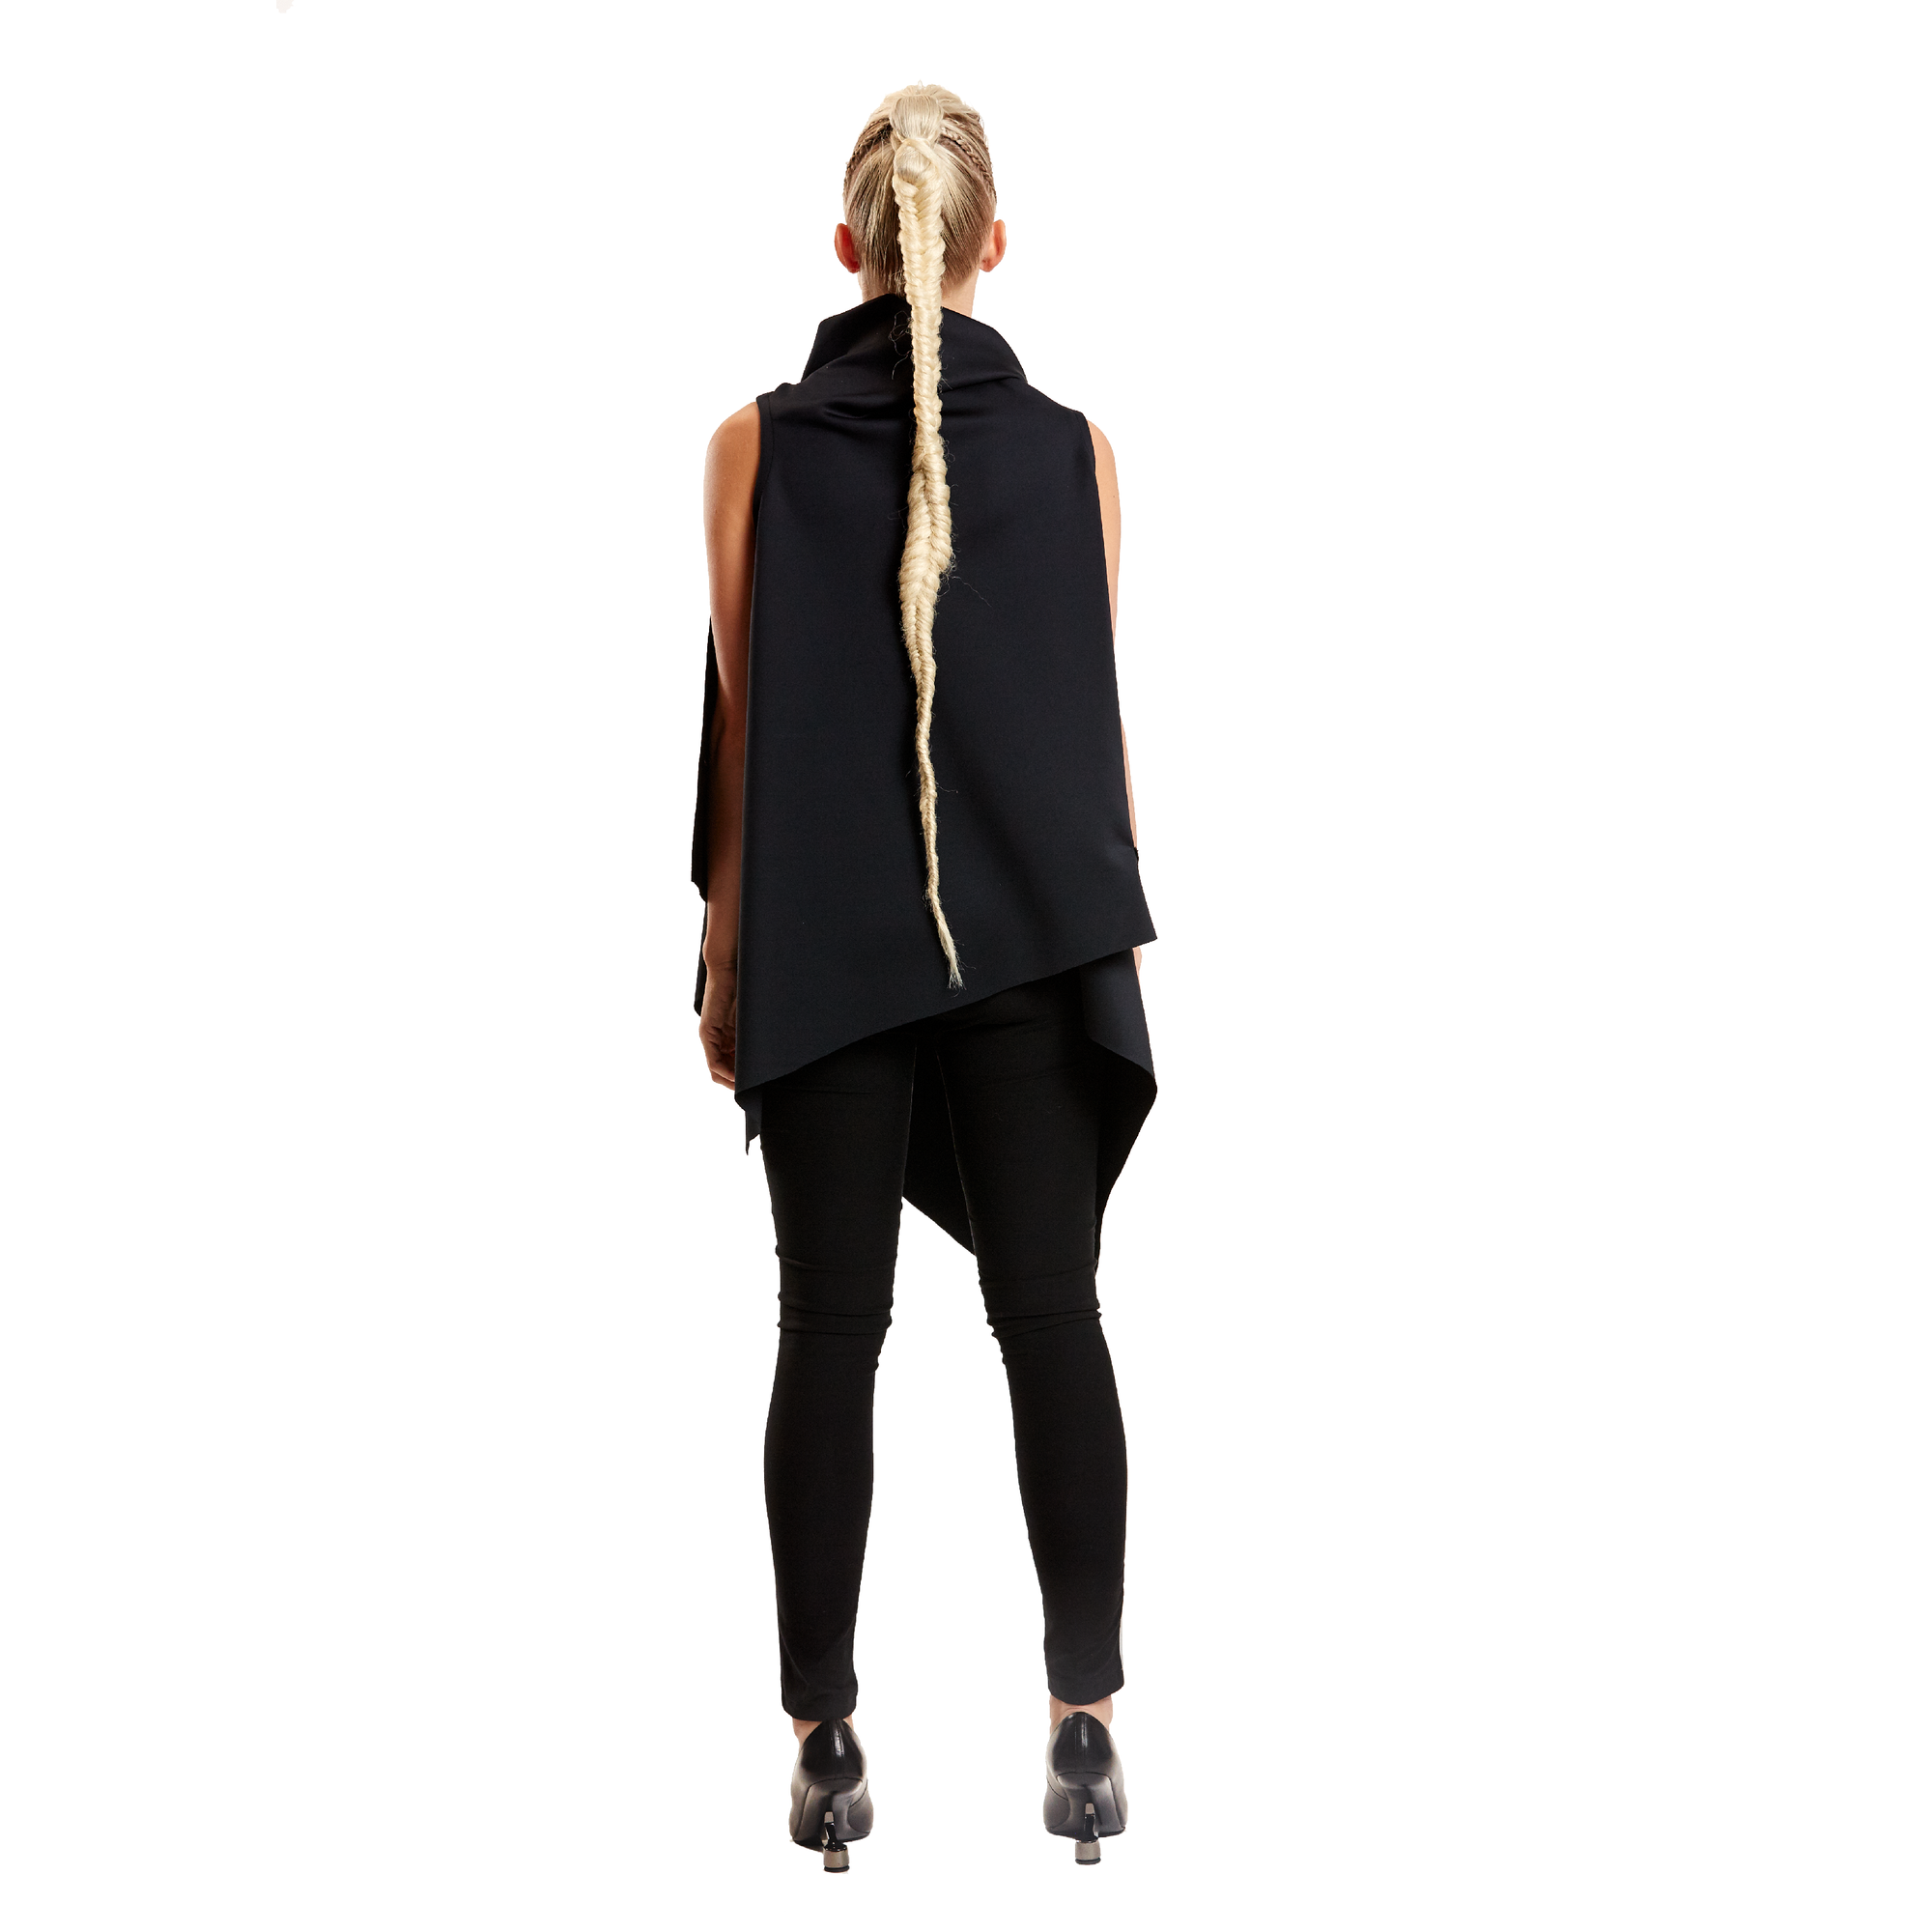 Asymmetric Longline Vest - Khaki – Manamou